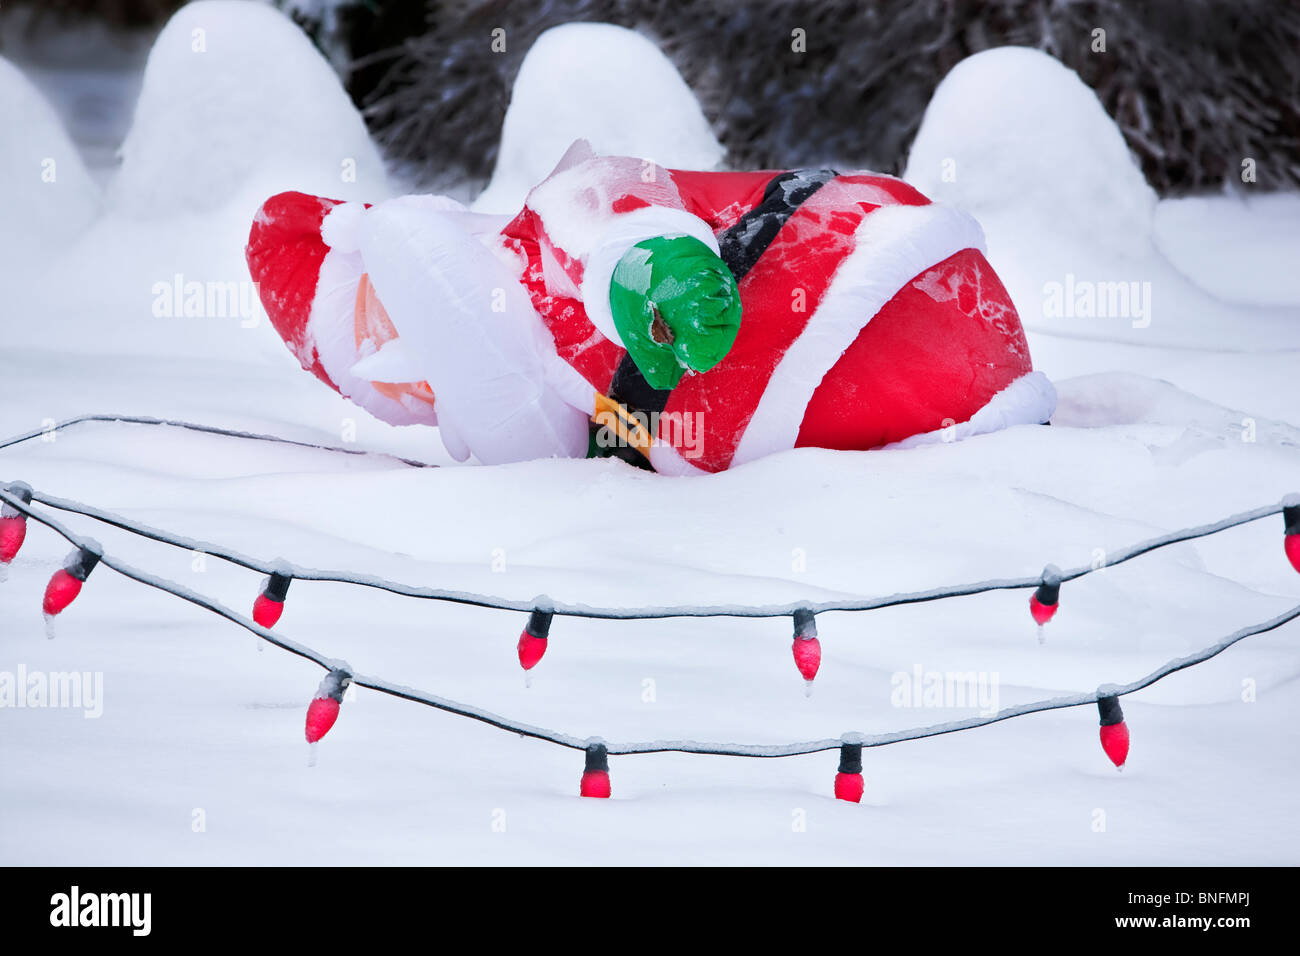 Santa fallen down in snow storm. Stock Photo